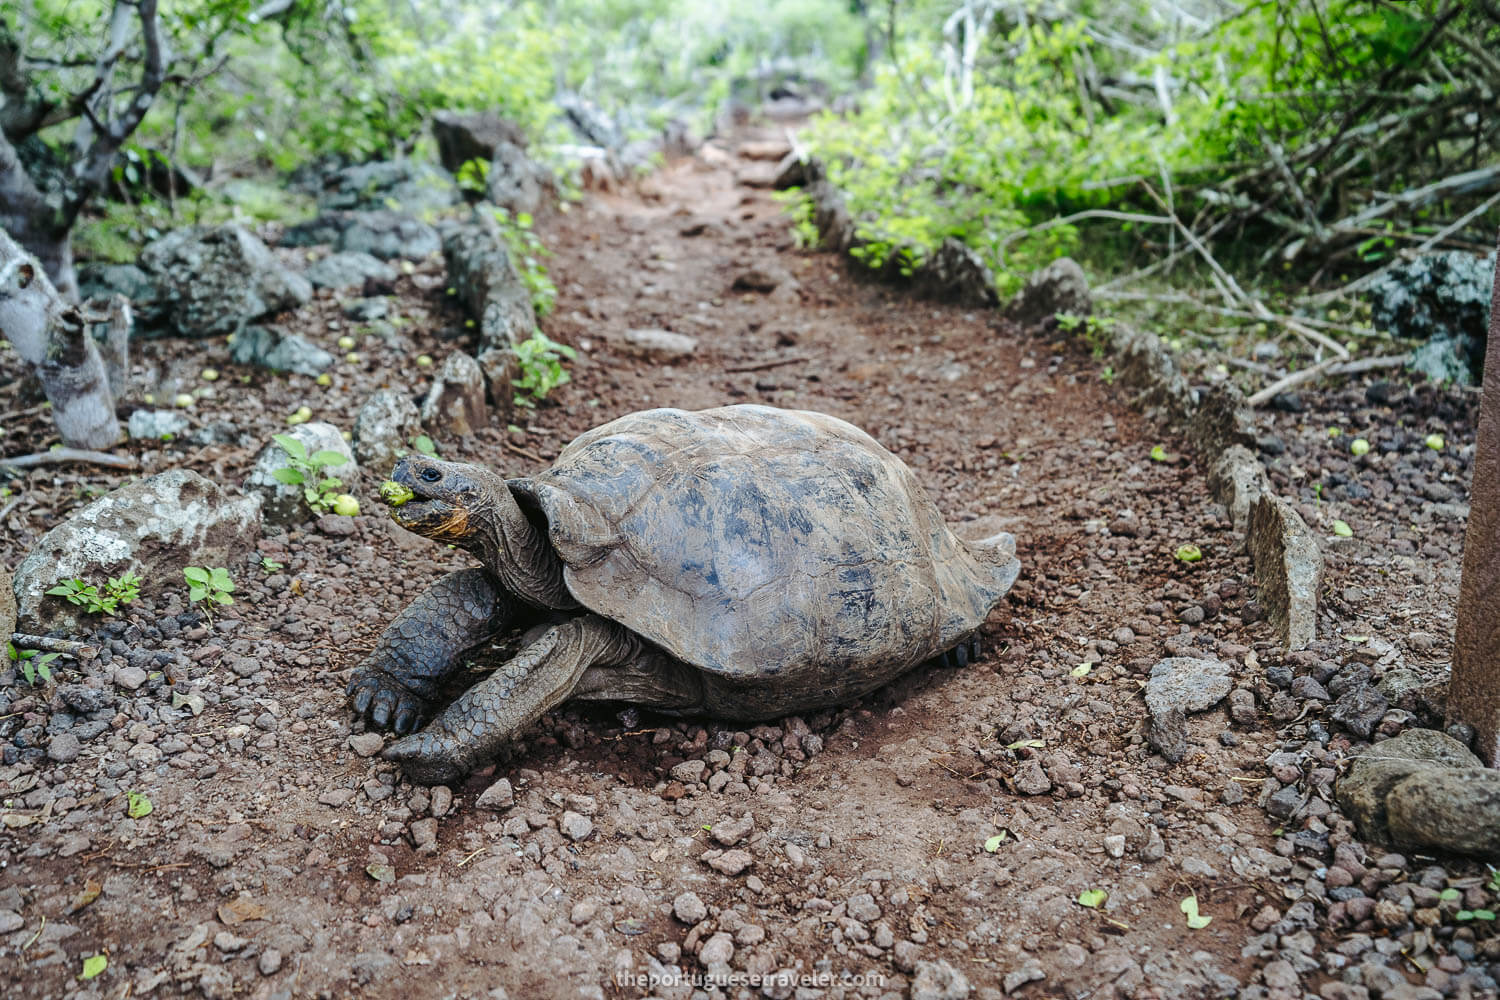 A saddleback tortoise